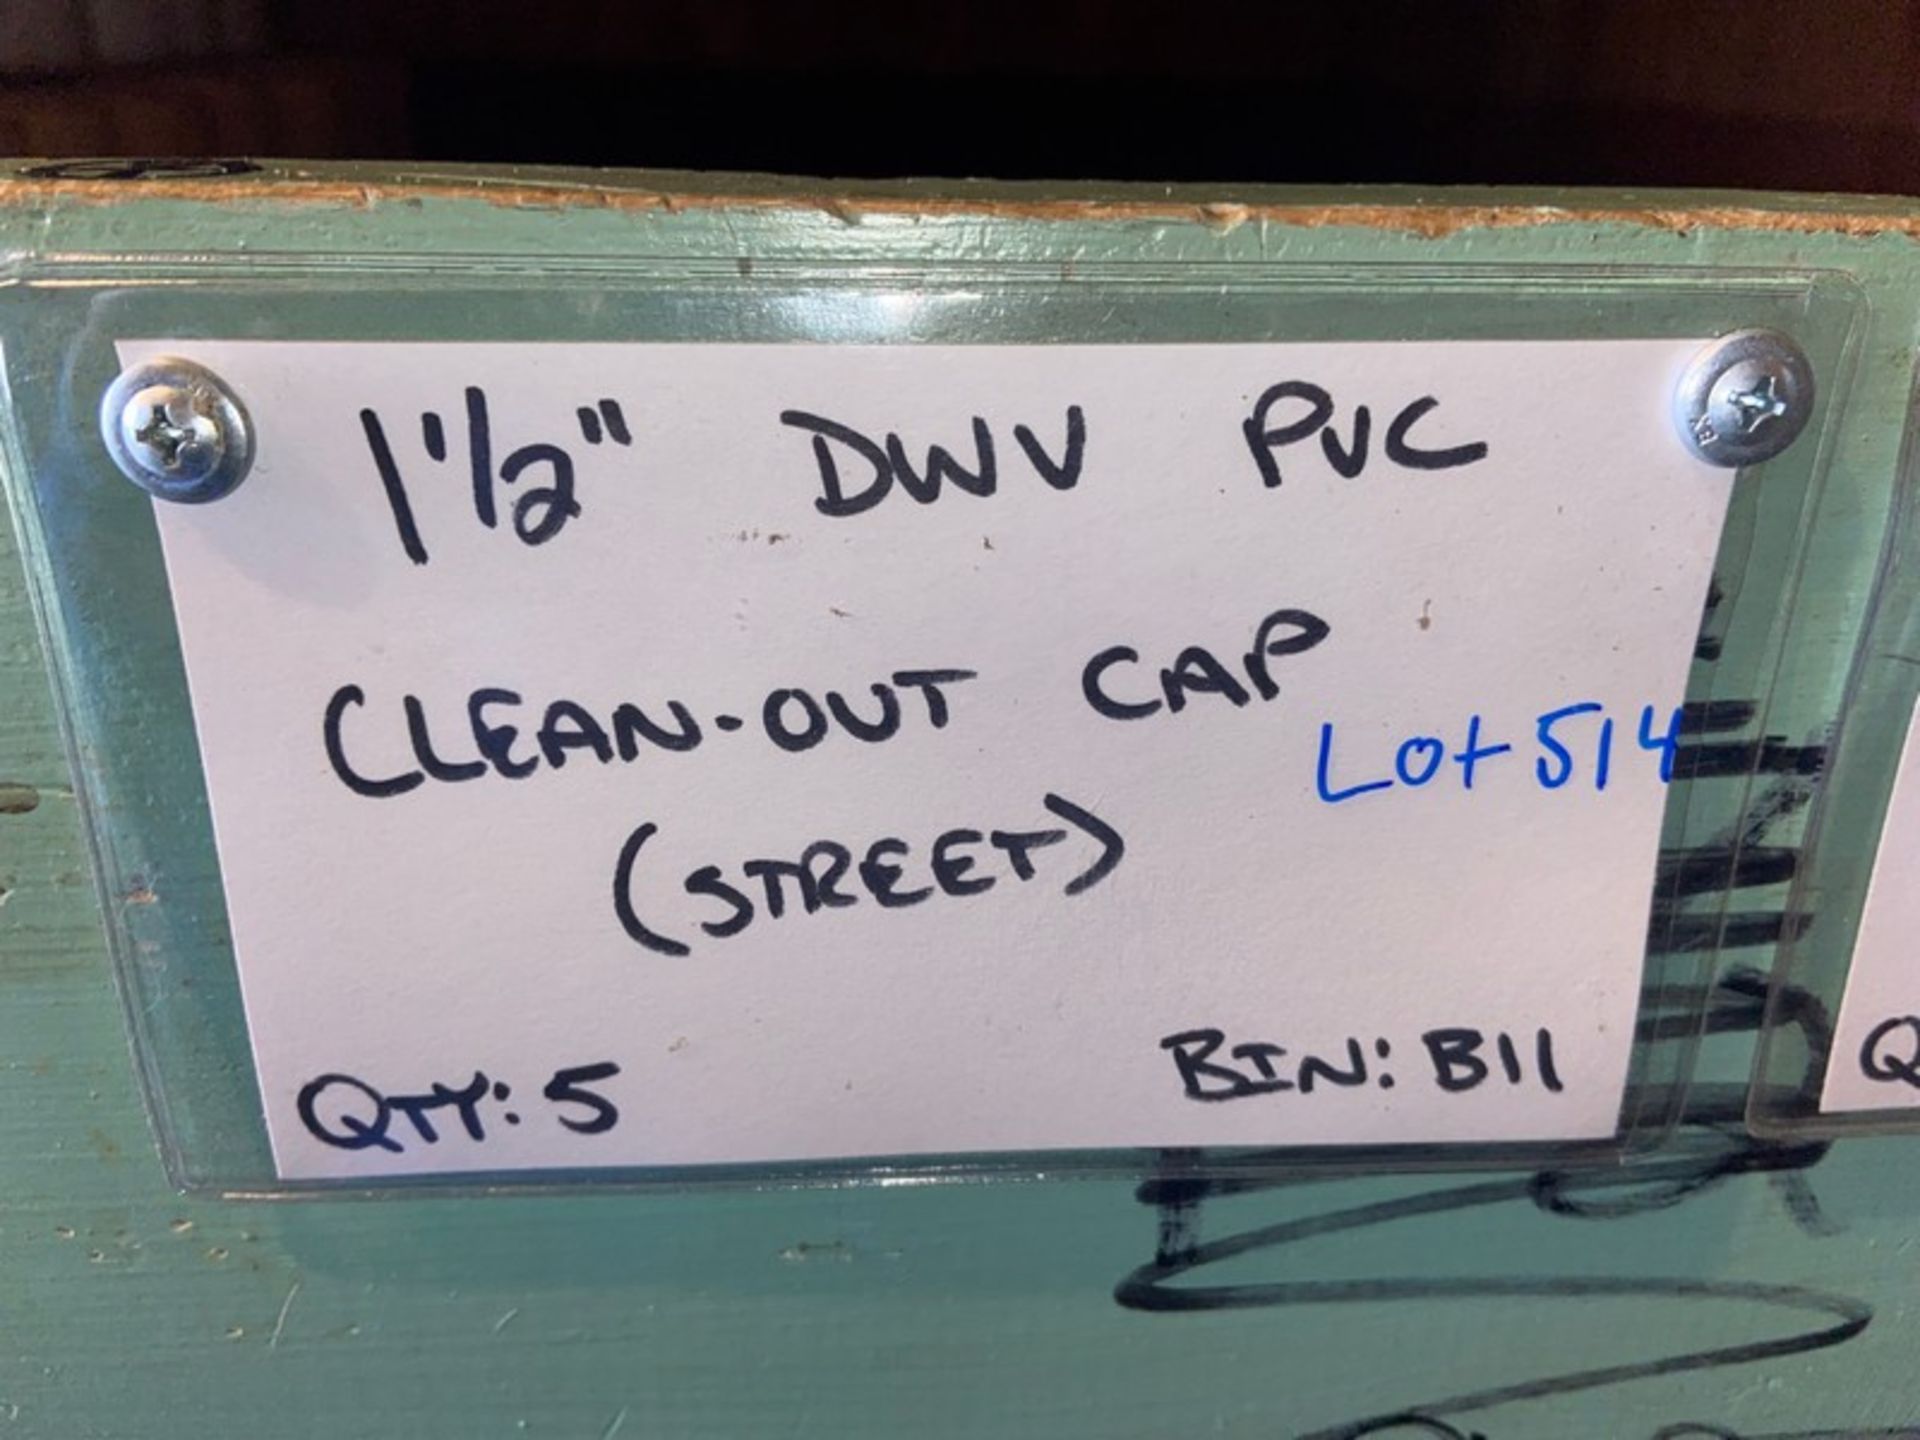 (5) 1 1/2” DWV PVC Clean-out CAP (STREET) (Bin: B11), Includes (23) 1 1/2” DWV PVC Clean-out CAP ( - Image 8 of 9